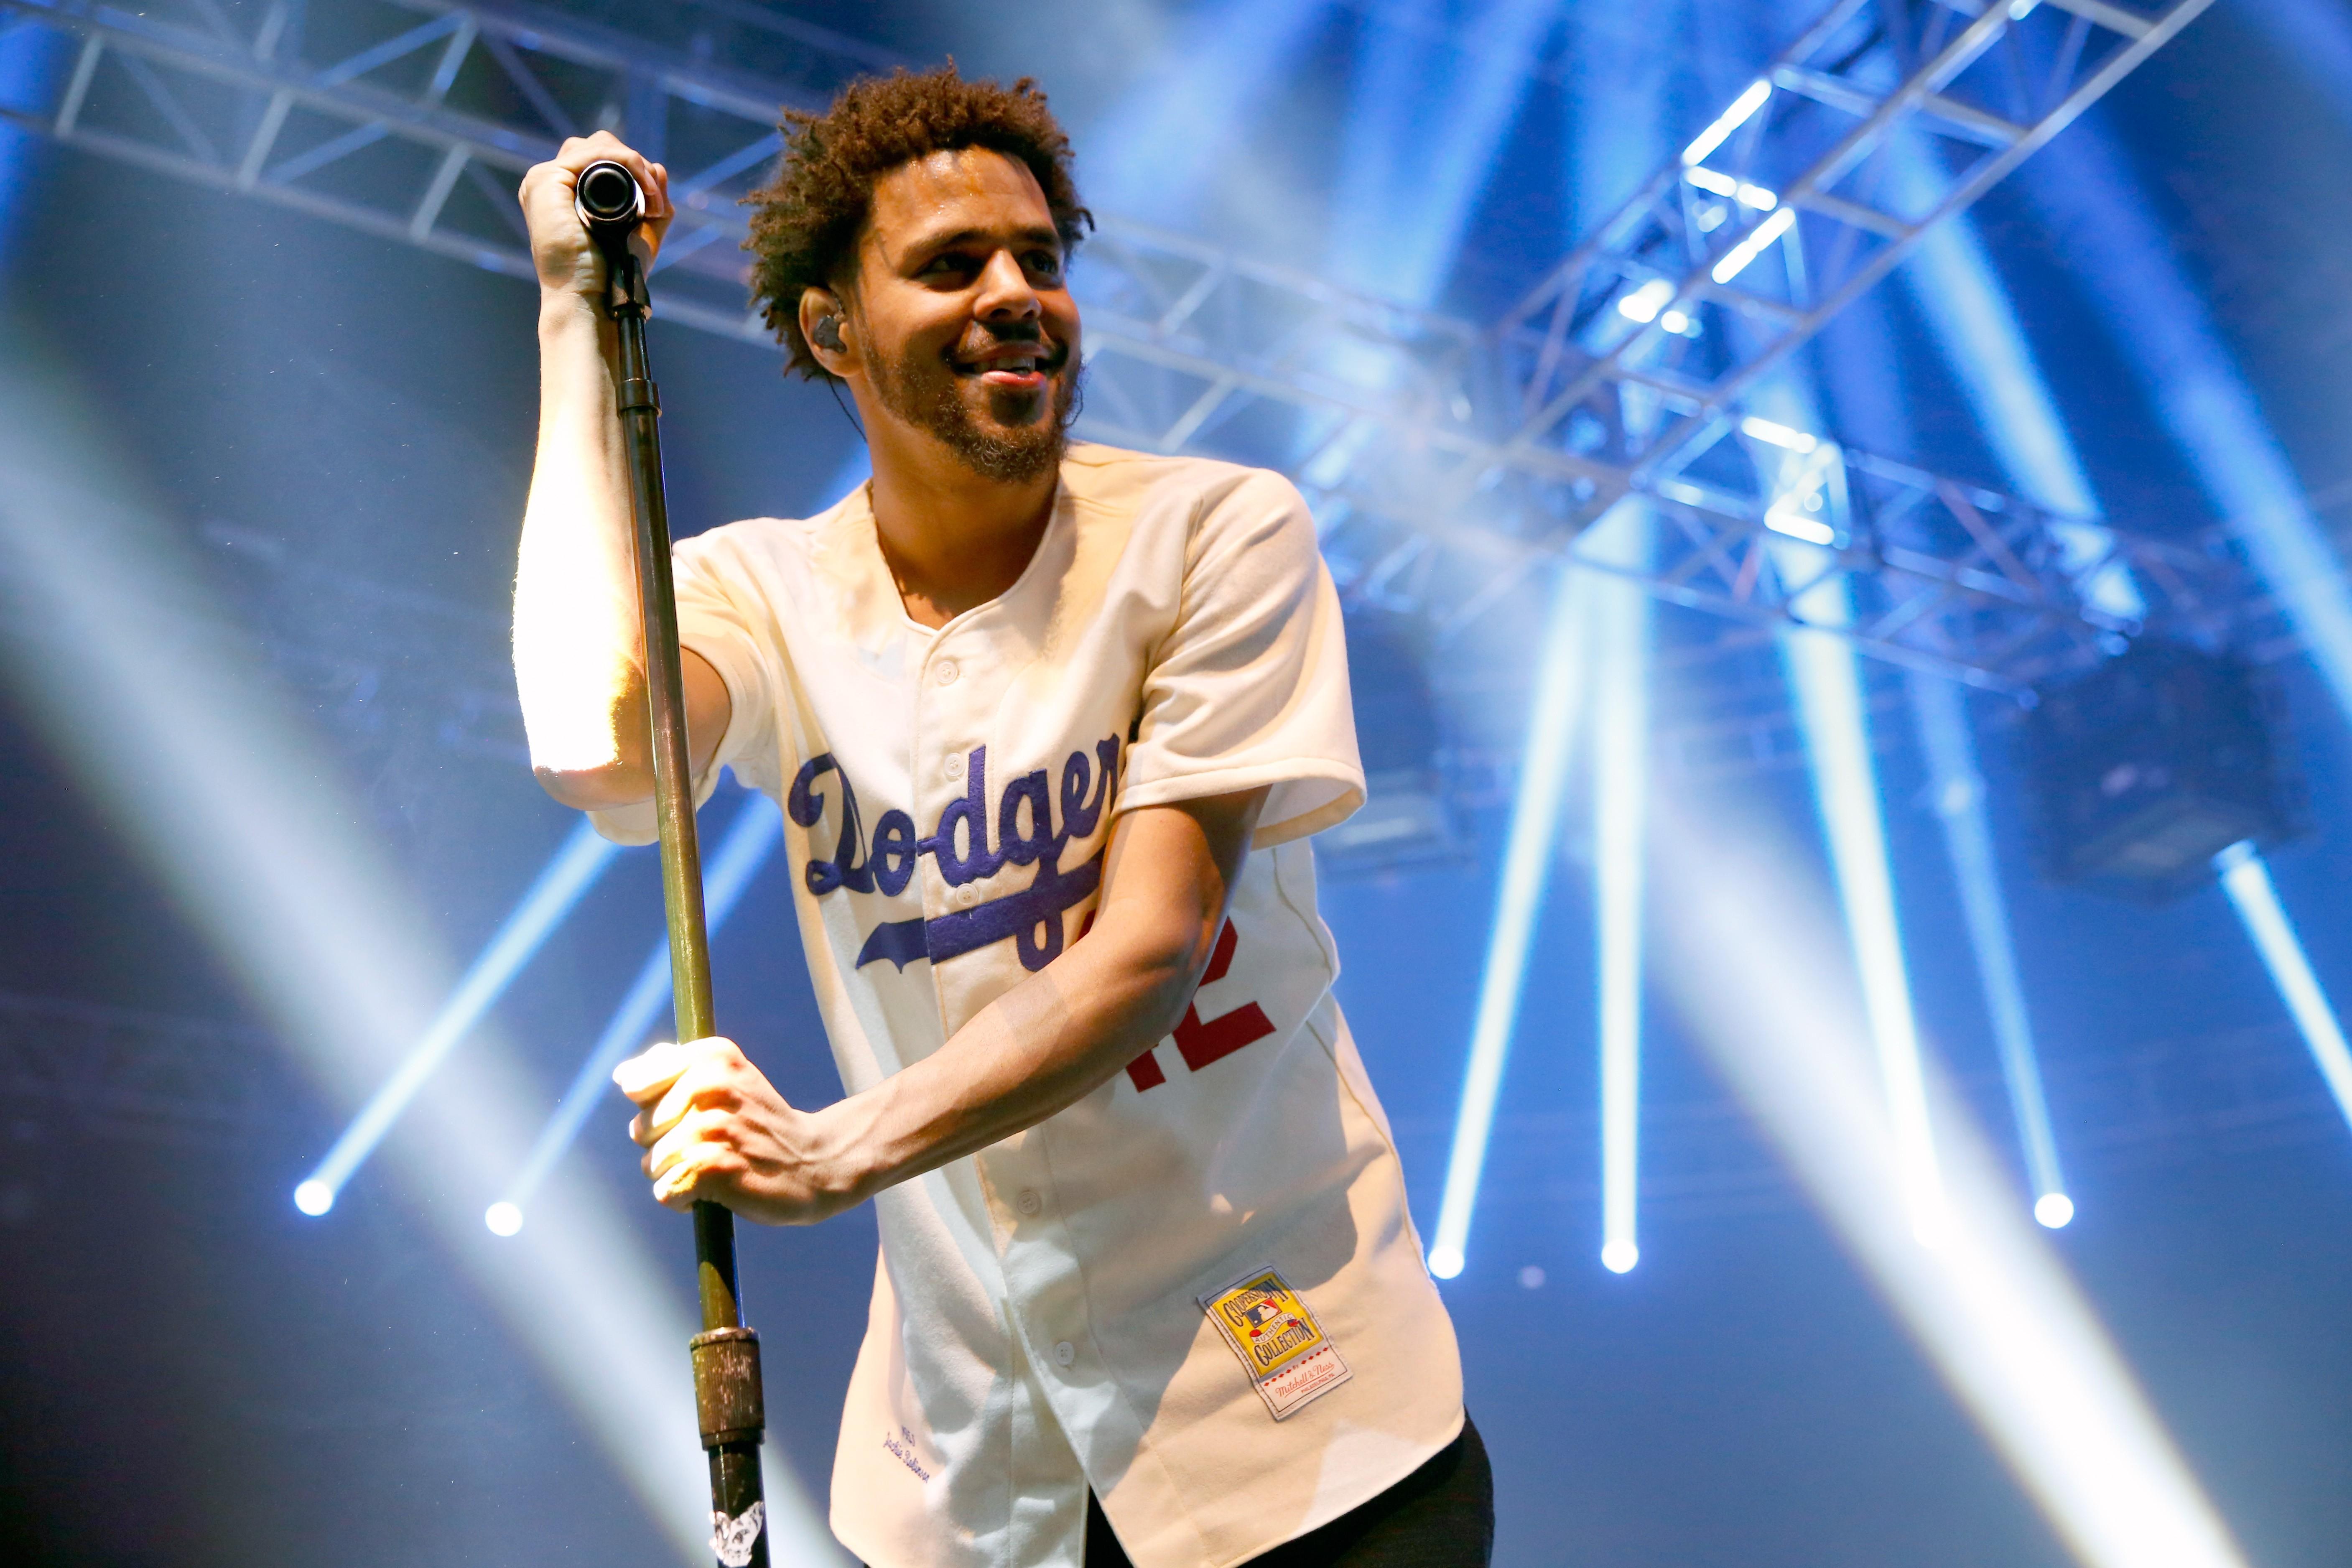 J. Cole Drops Tracklist Ahead Of Album Release